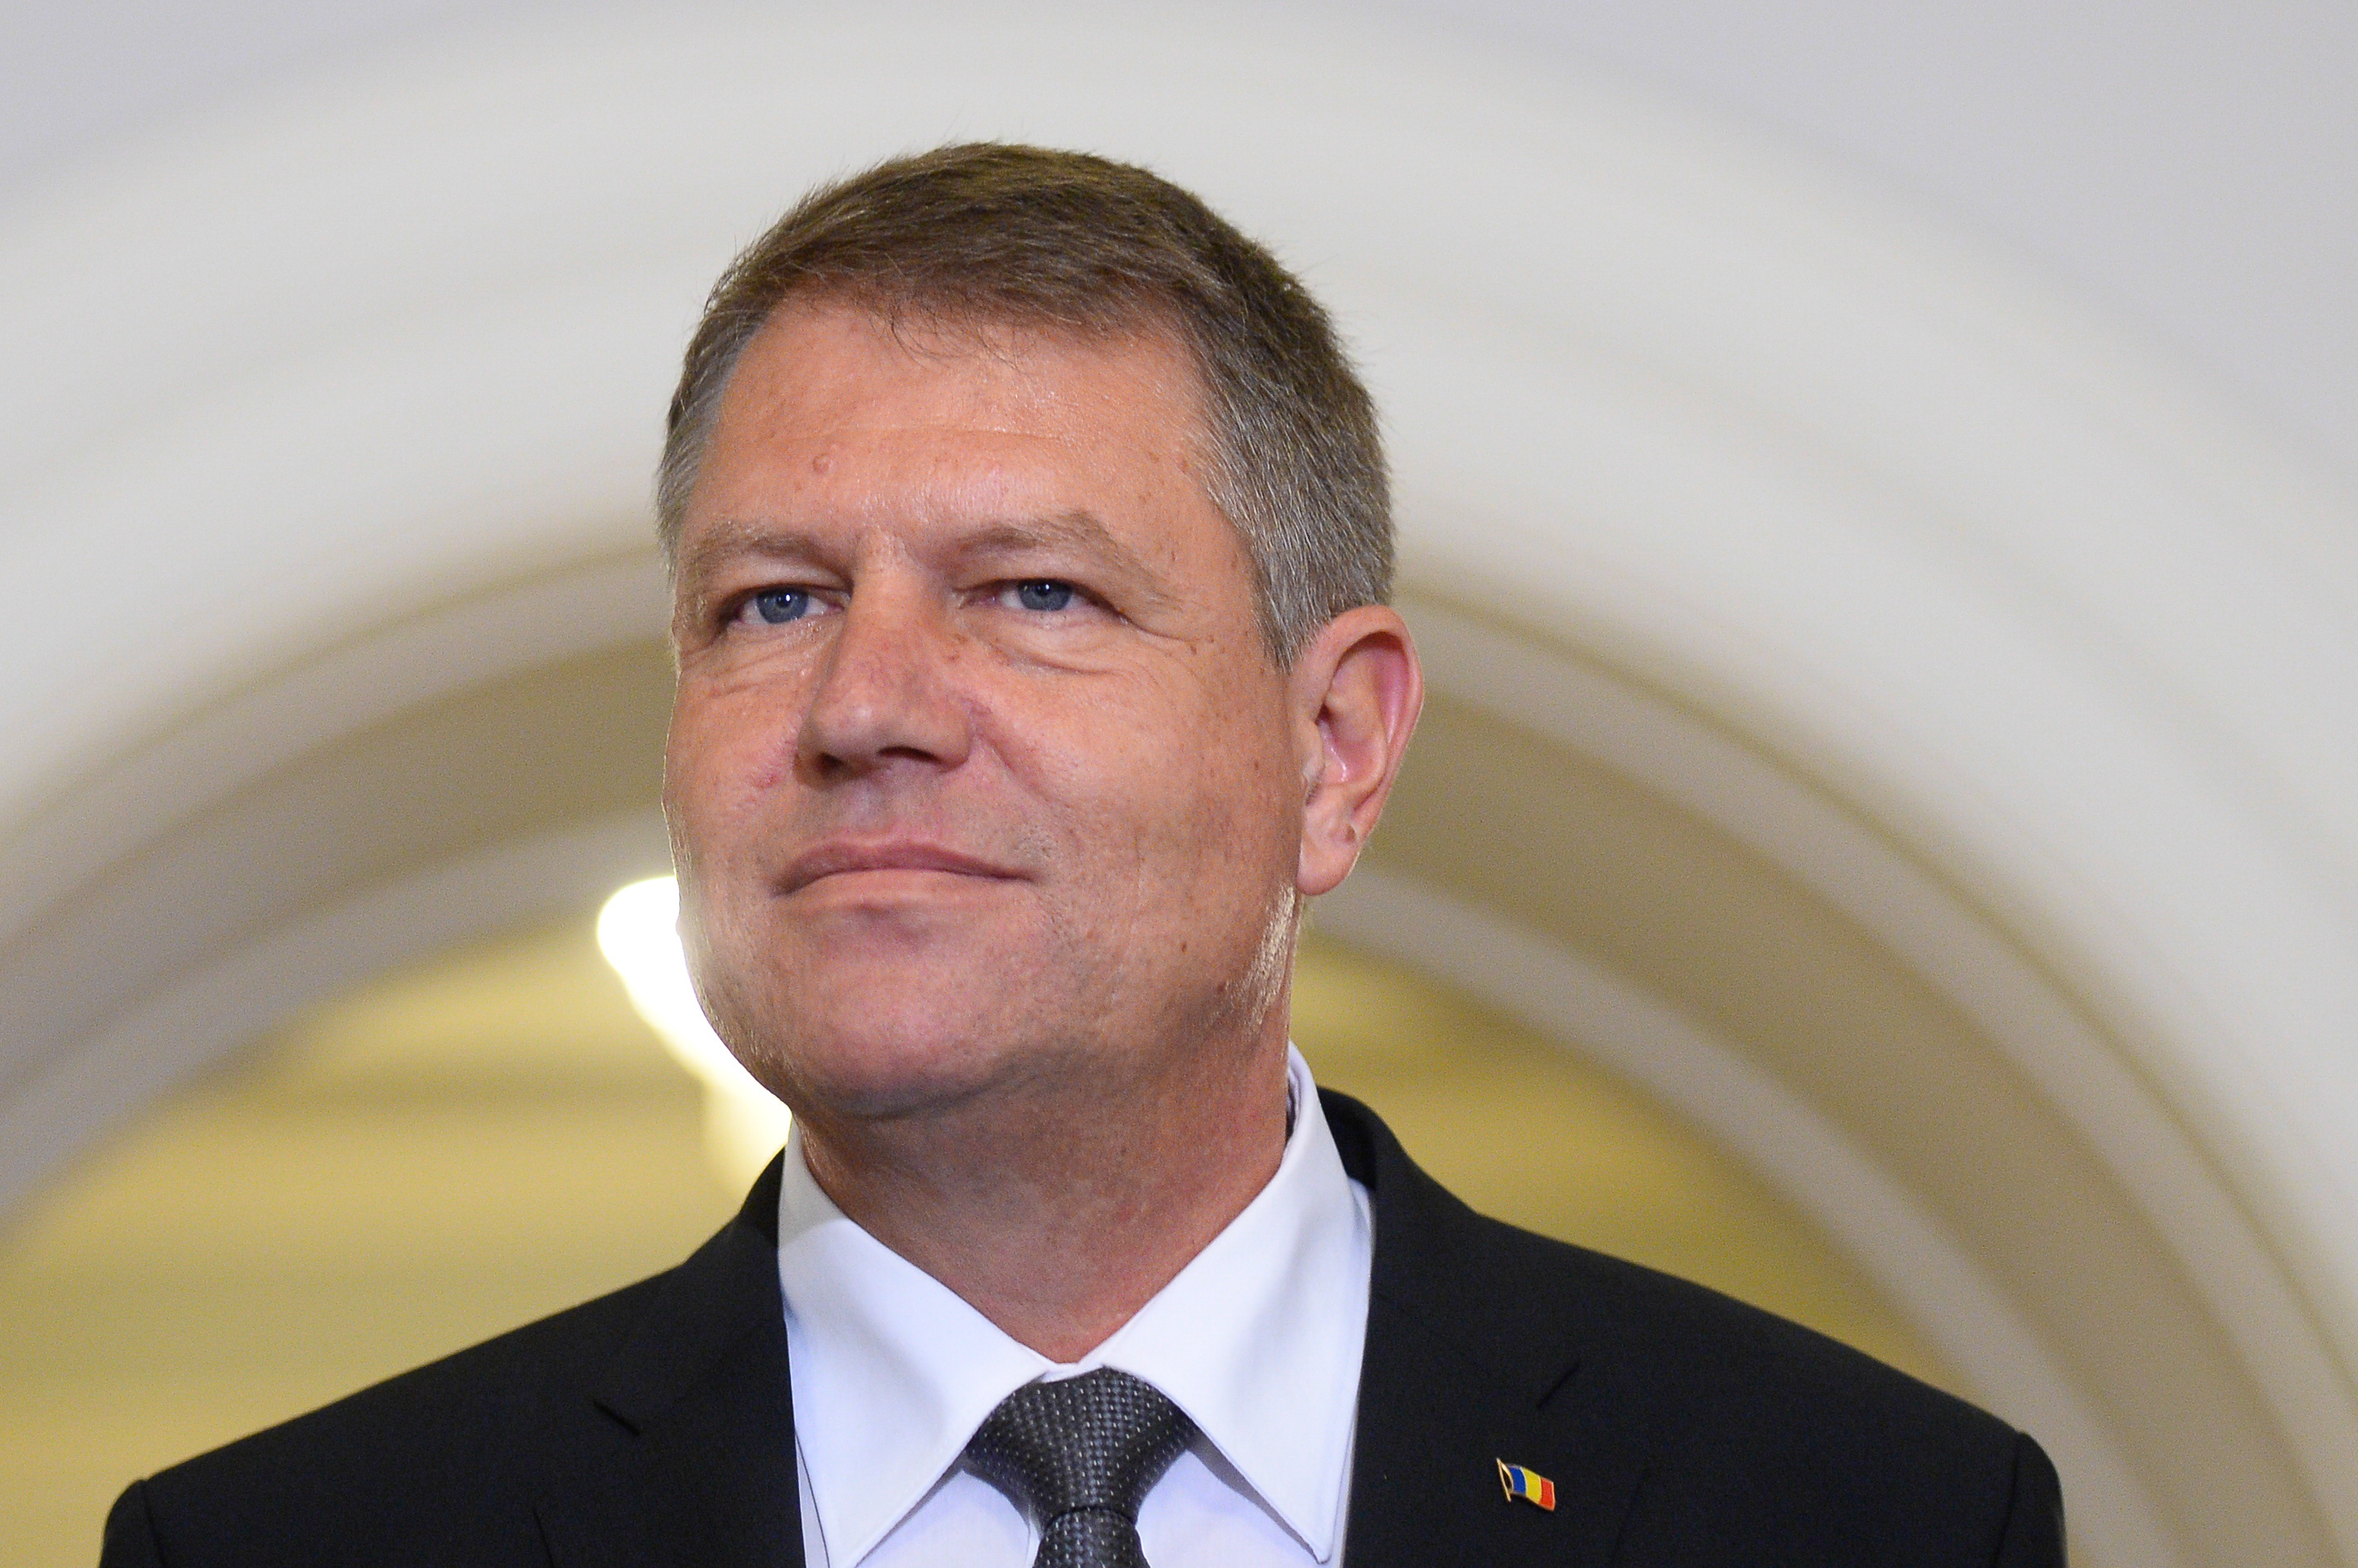 Moment istoric: Noul preşedinte al României este Klaus Iohannis